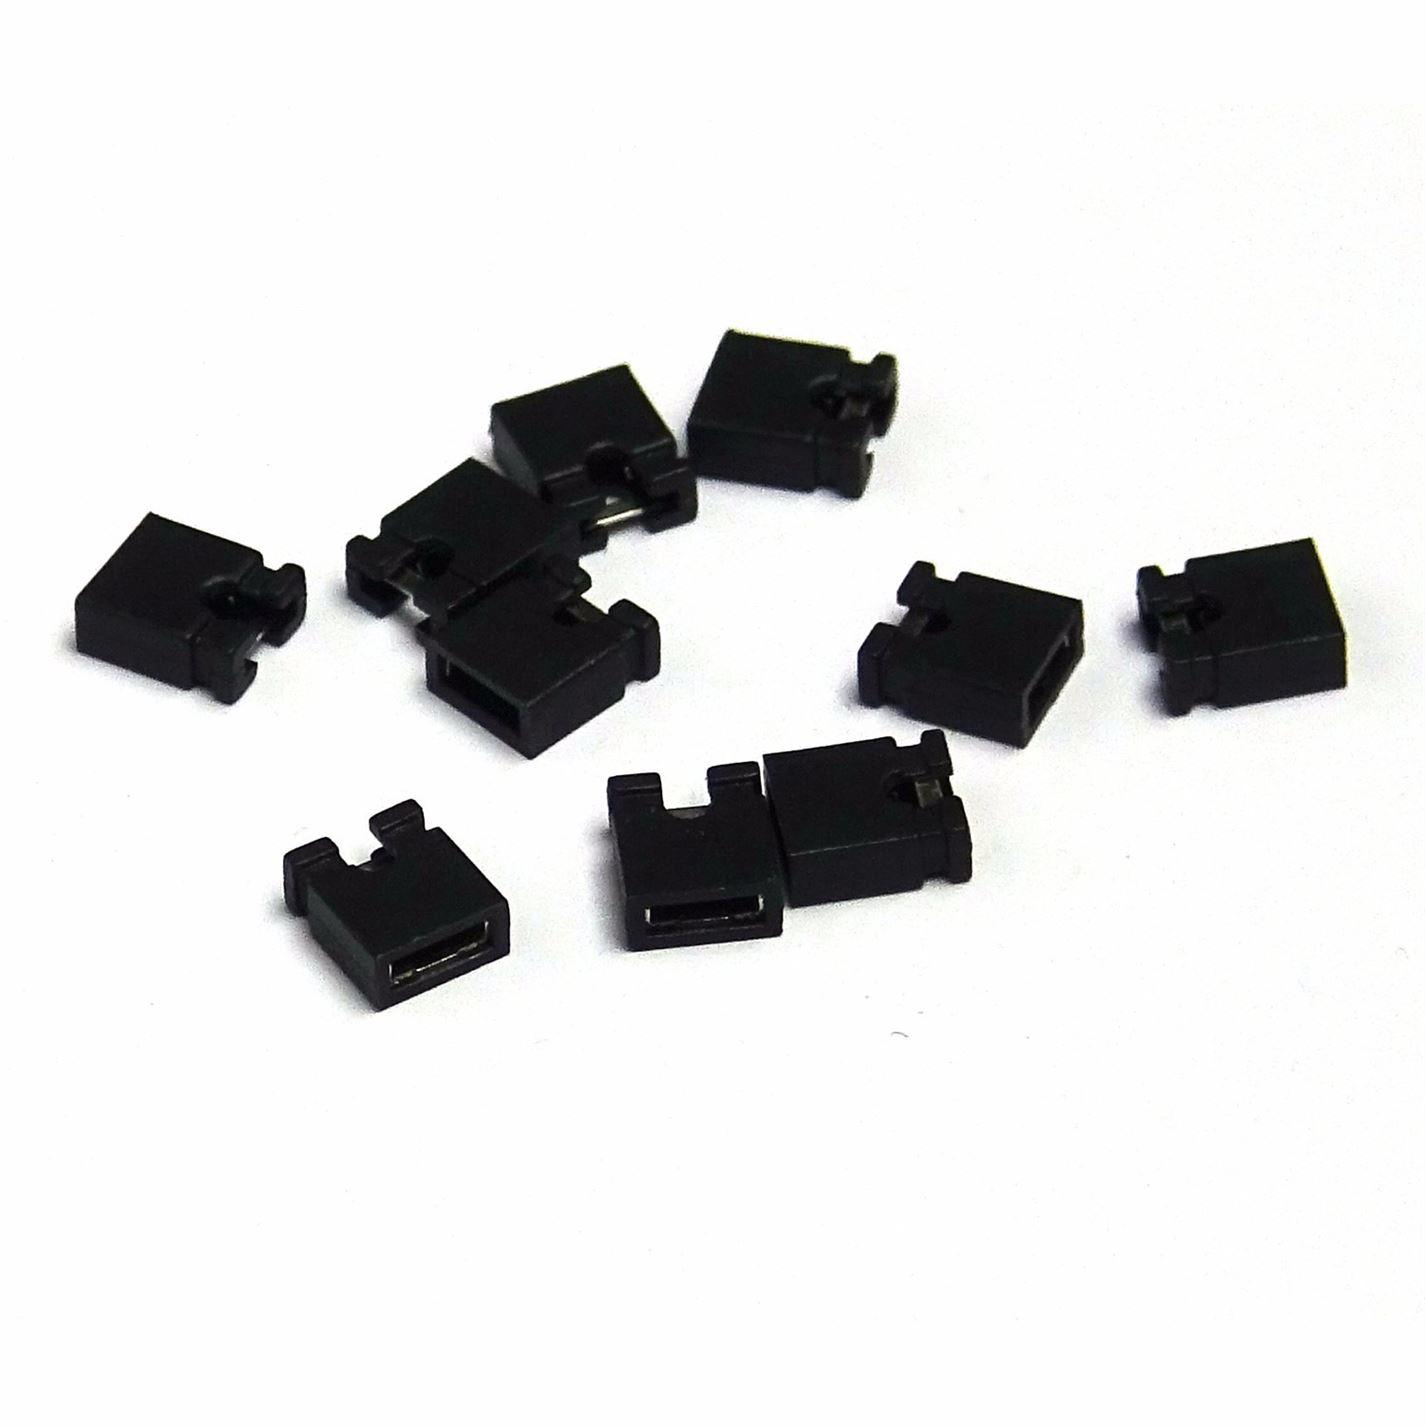 10 x 2.54mm Circuit Board Shunts Short Jumper Cap Mini Micro Header Black - UK Seller